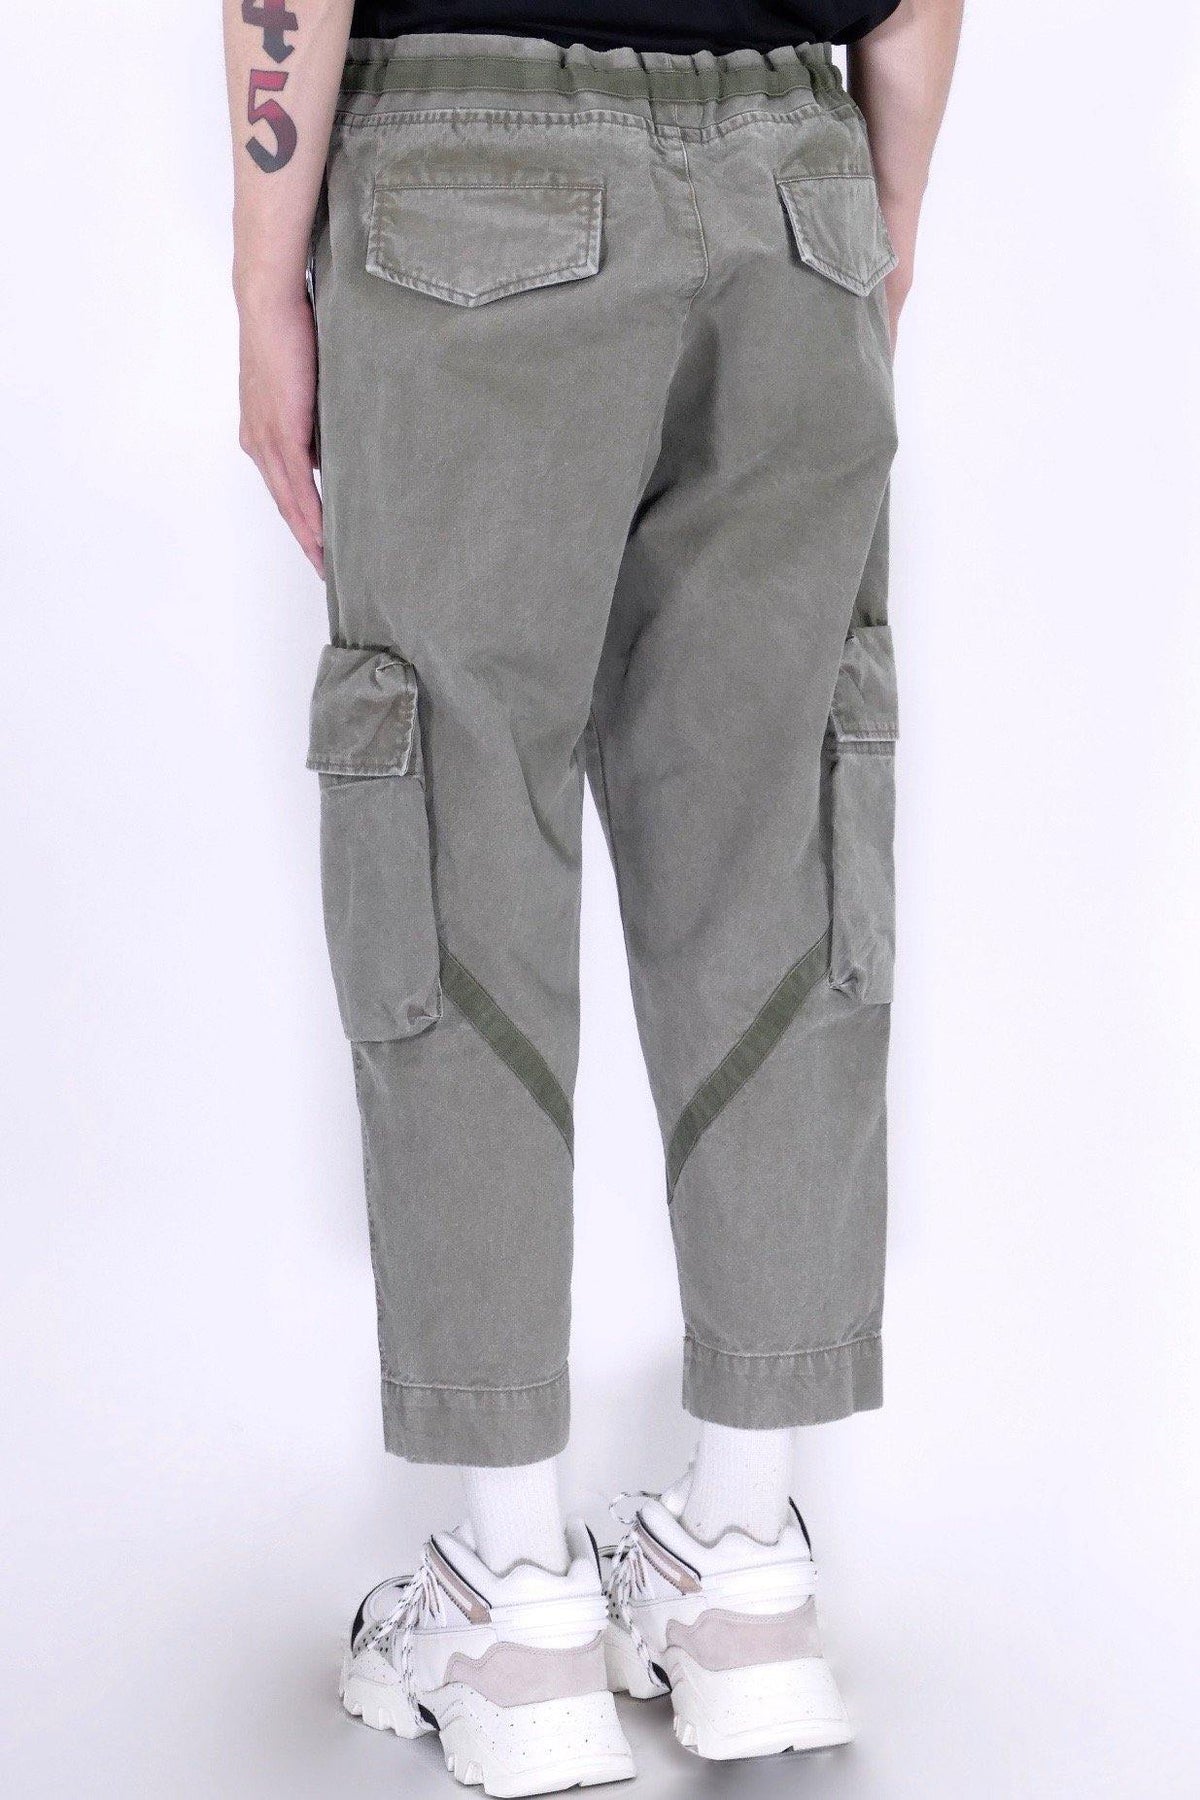 Greg Lauren Tent Canvas Cargo Pants - Army Green - Due West